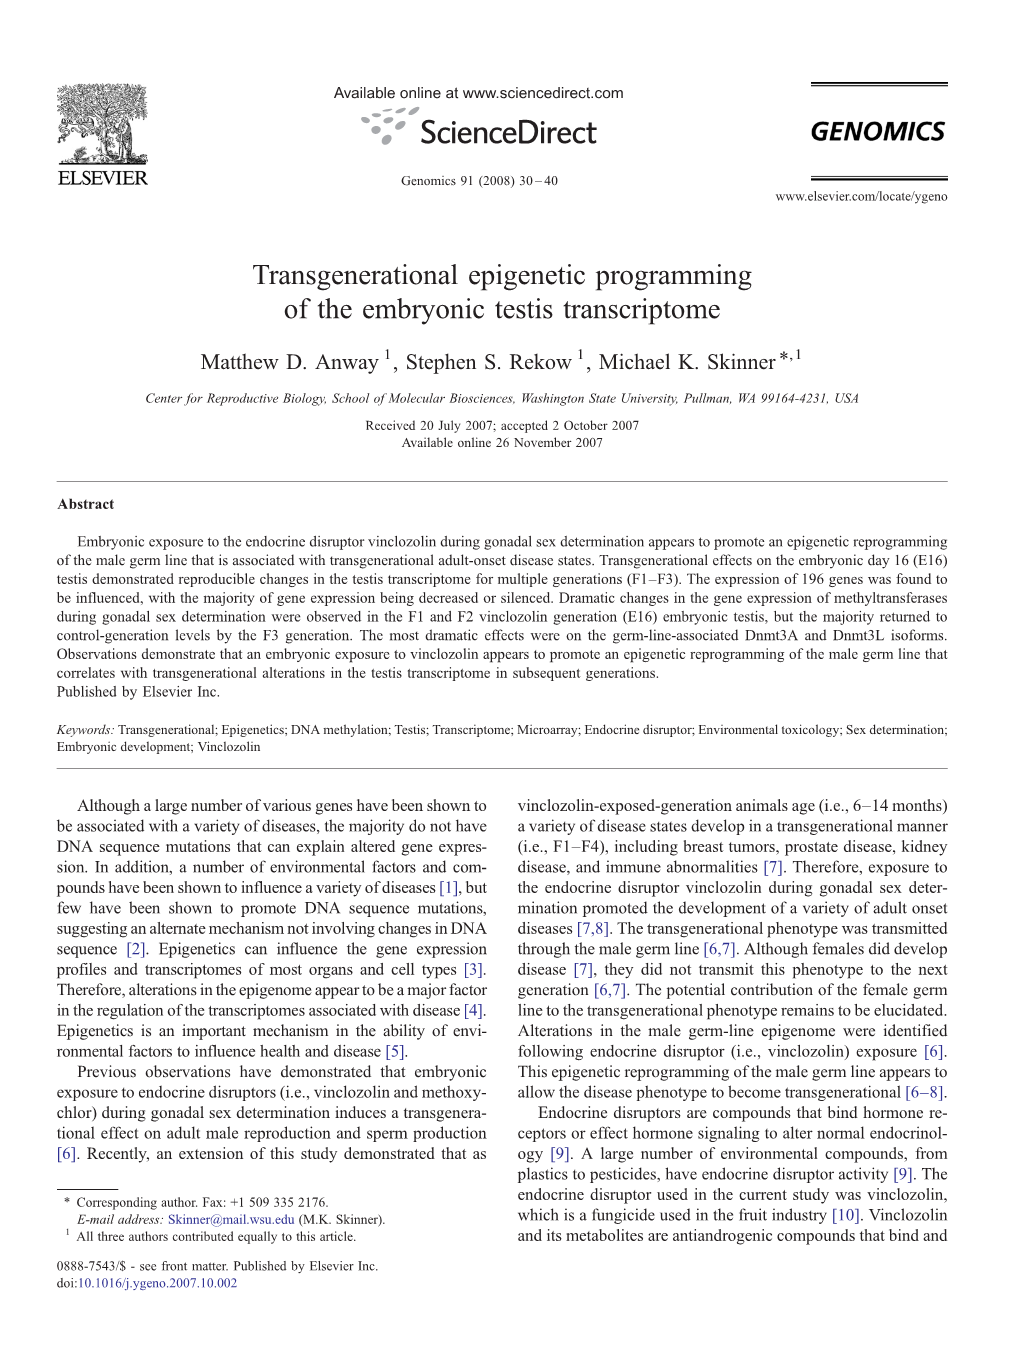 Transgenerational Epigenetic Programming of the Testis